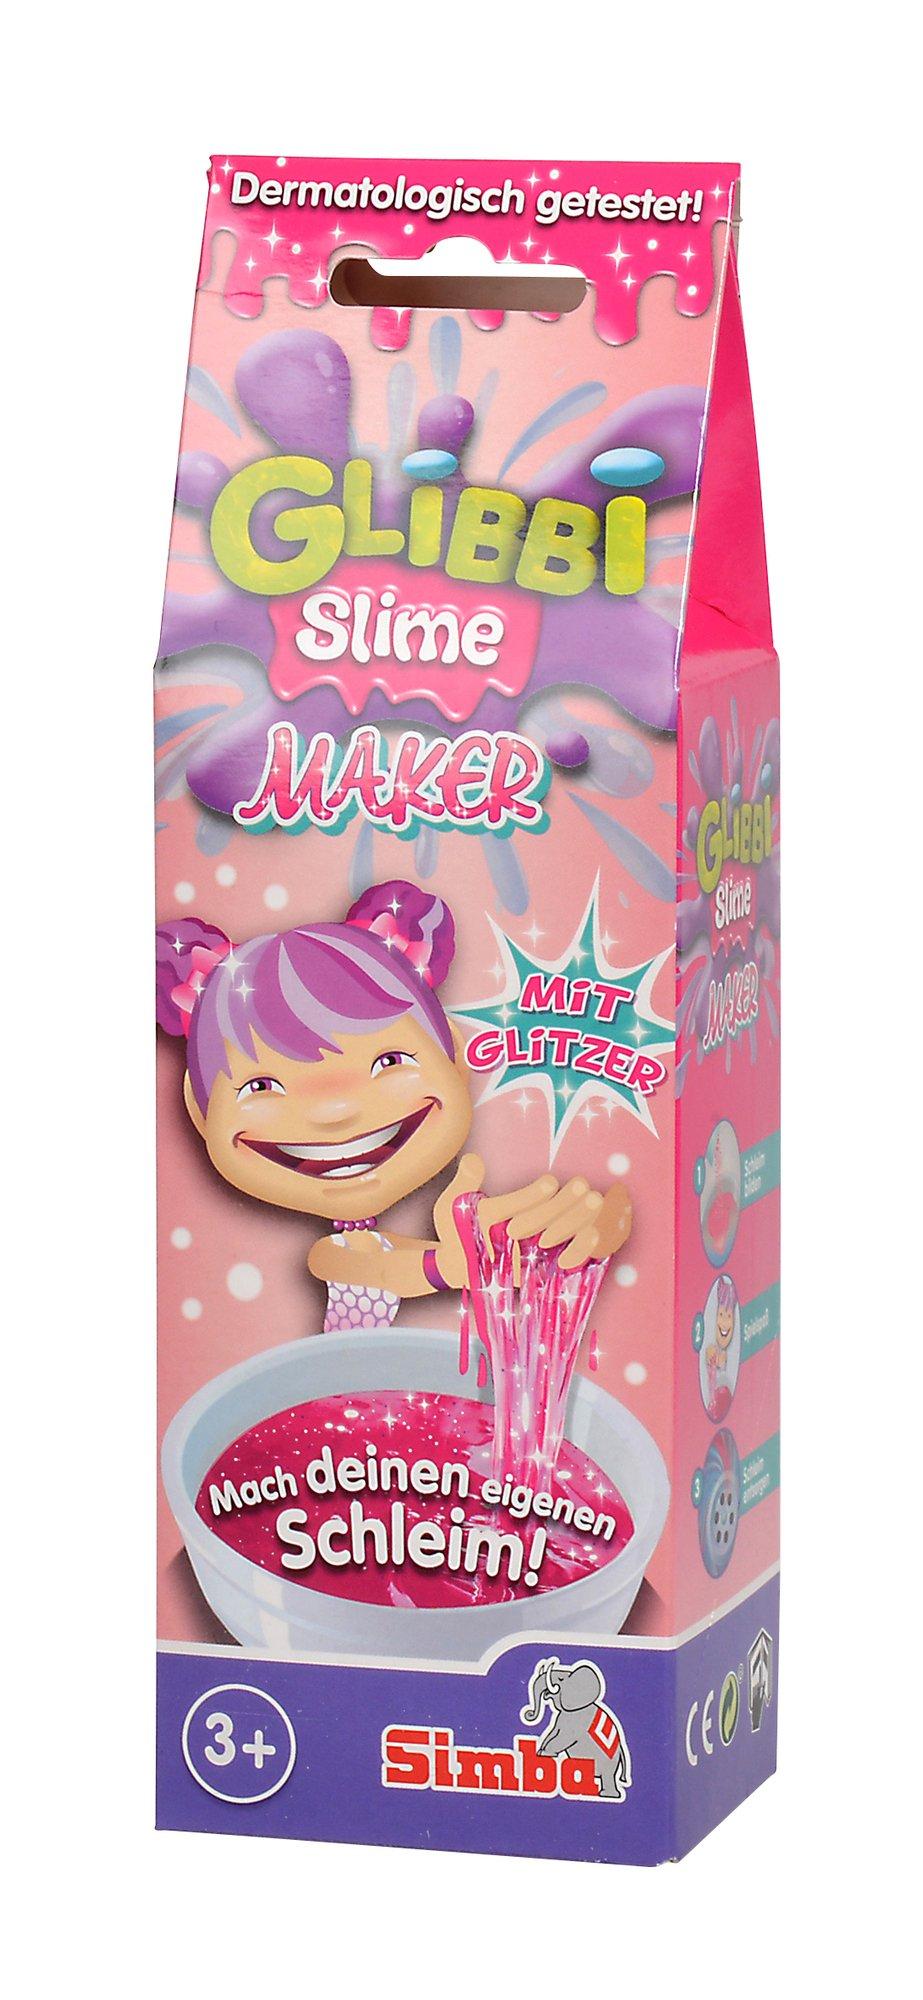 Glibbi Slime Maker